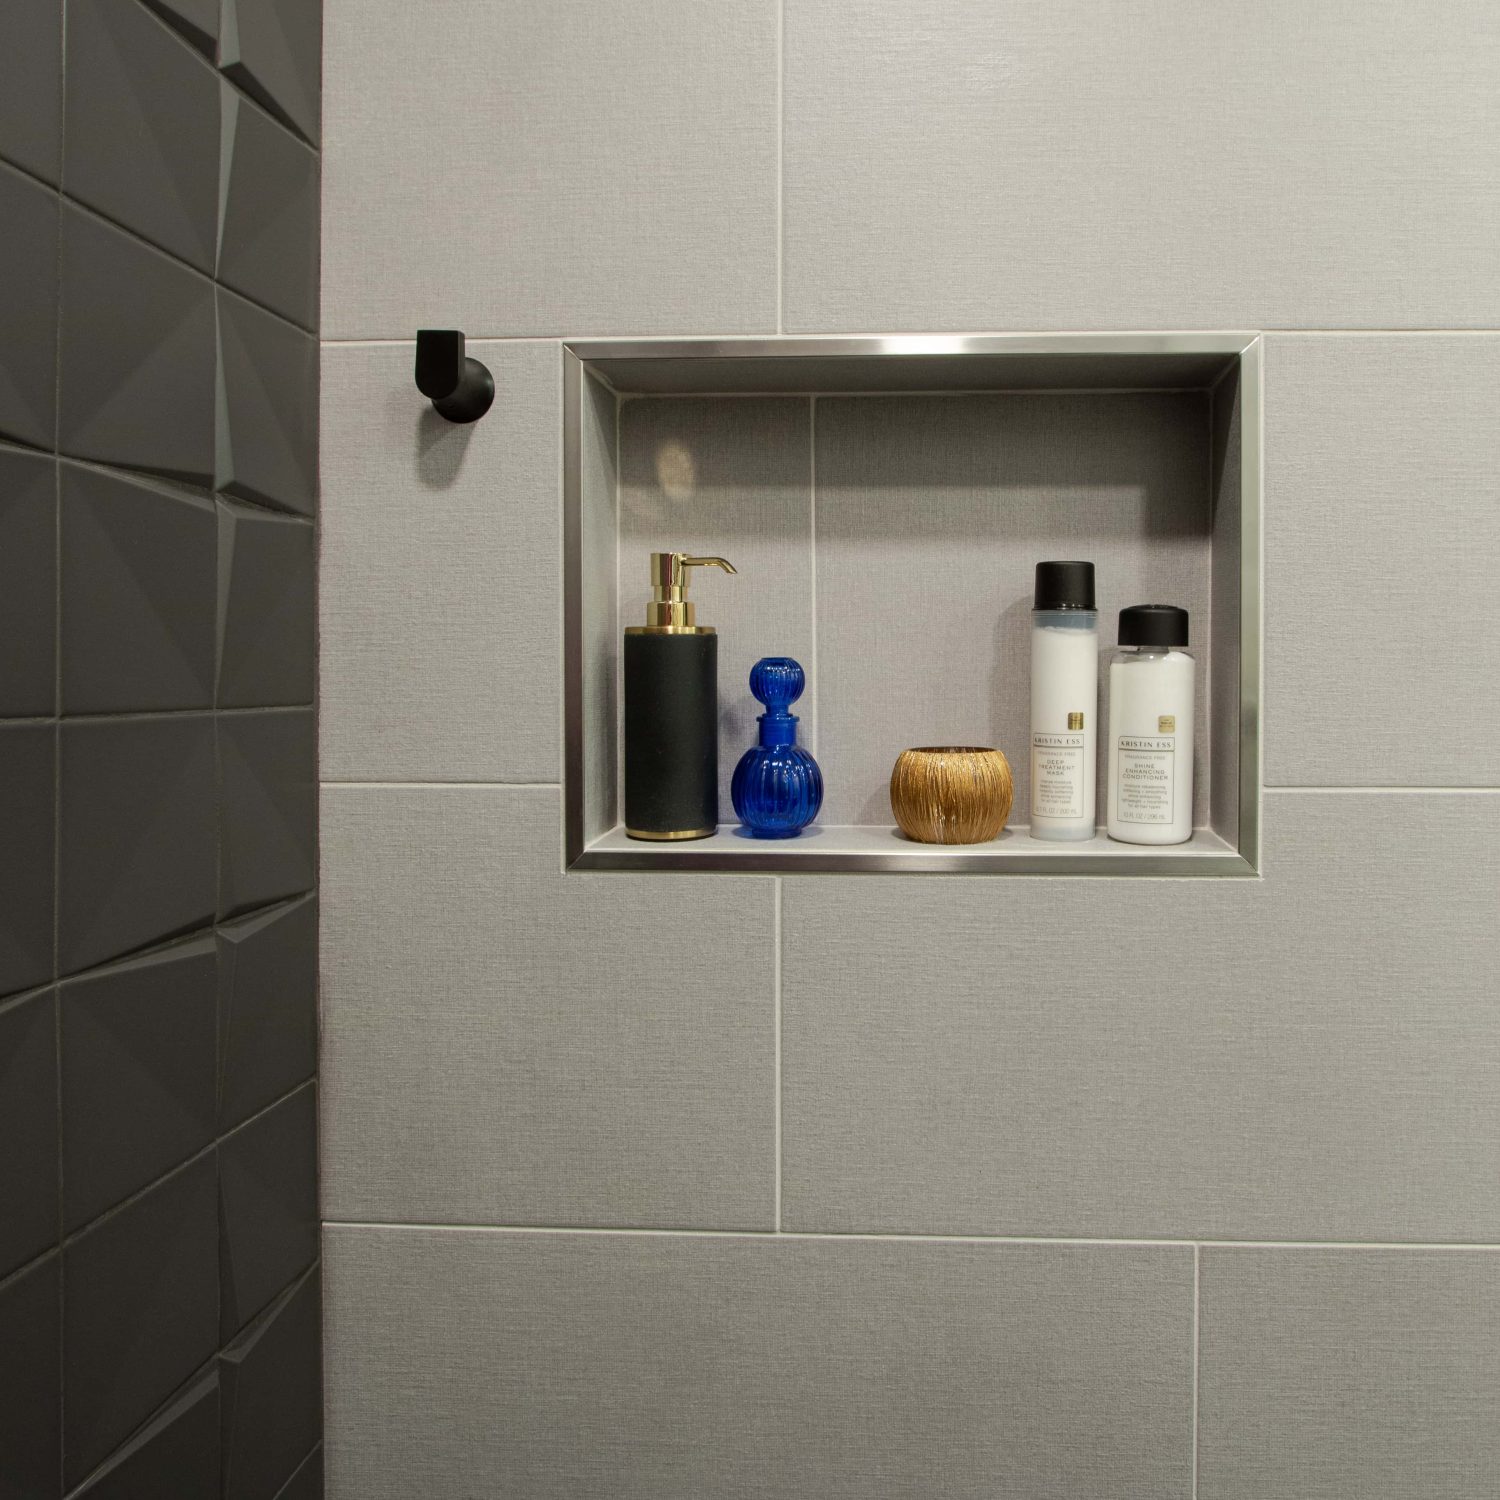 Shampoo niche featured in custom shower